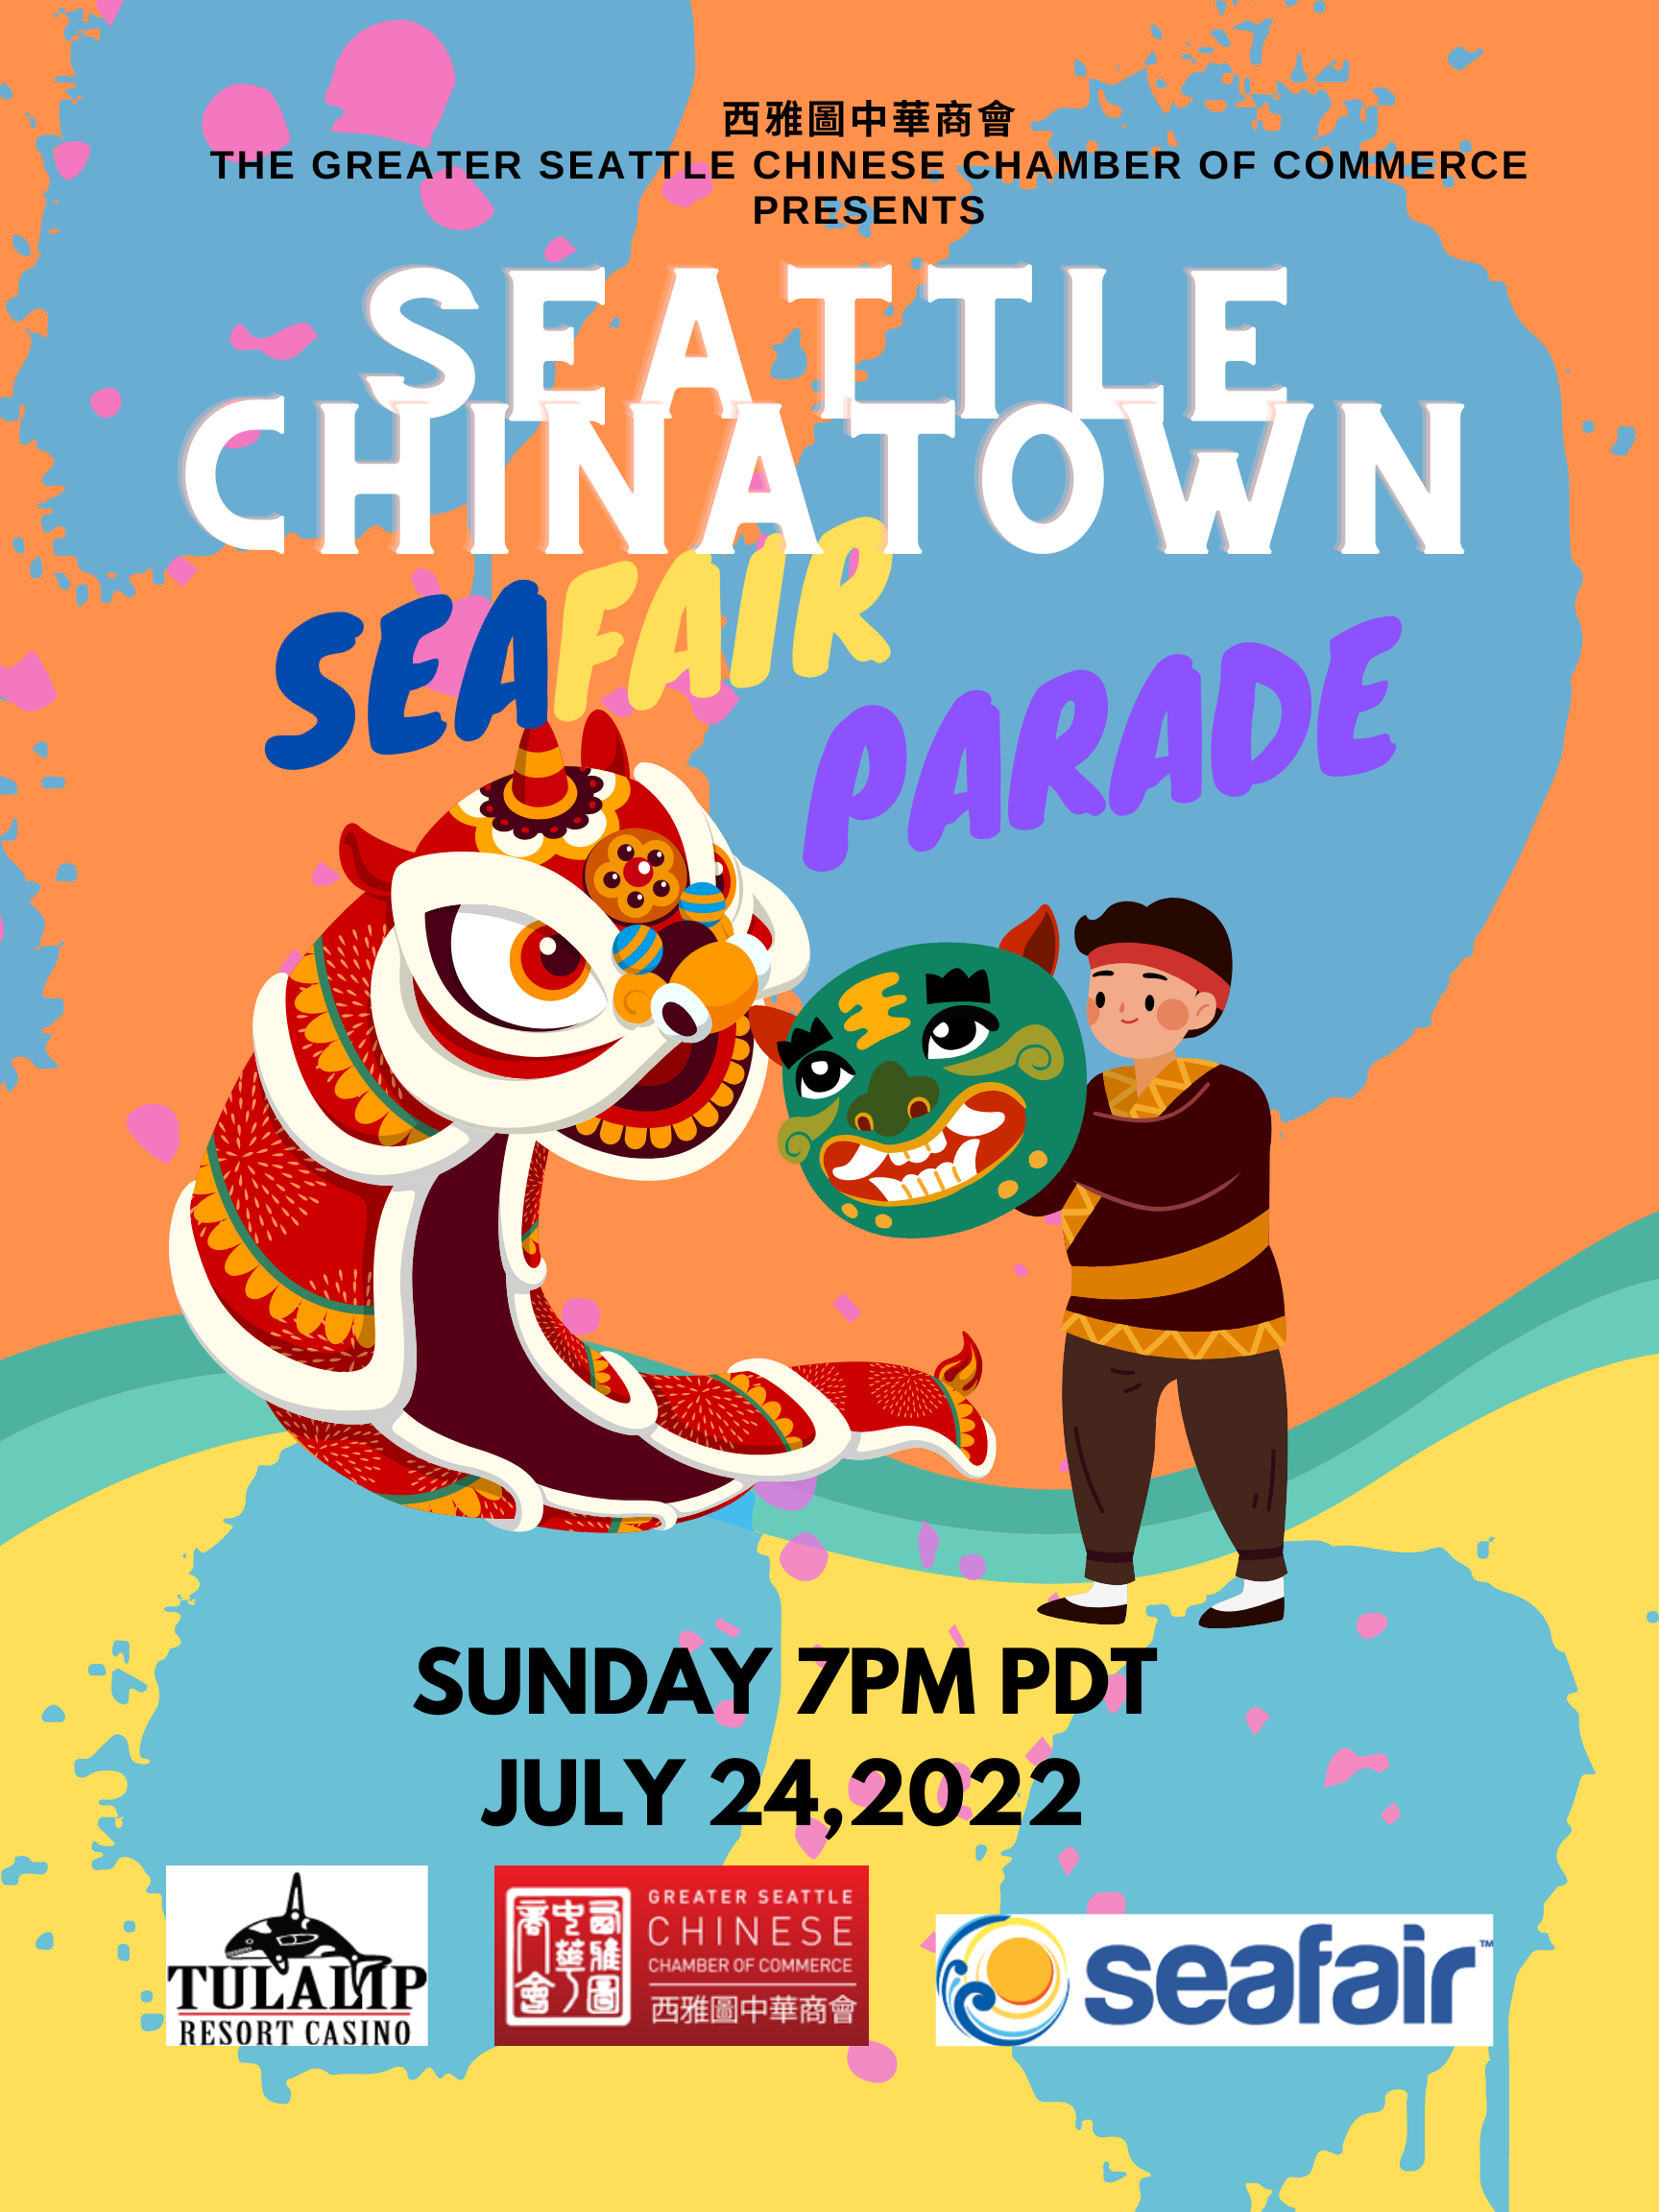 Seafair chinatown 2022 poster